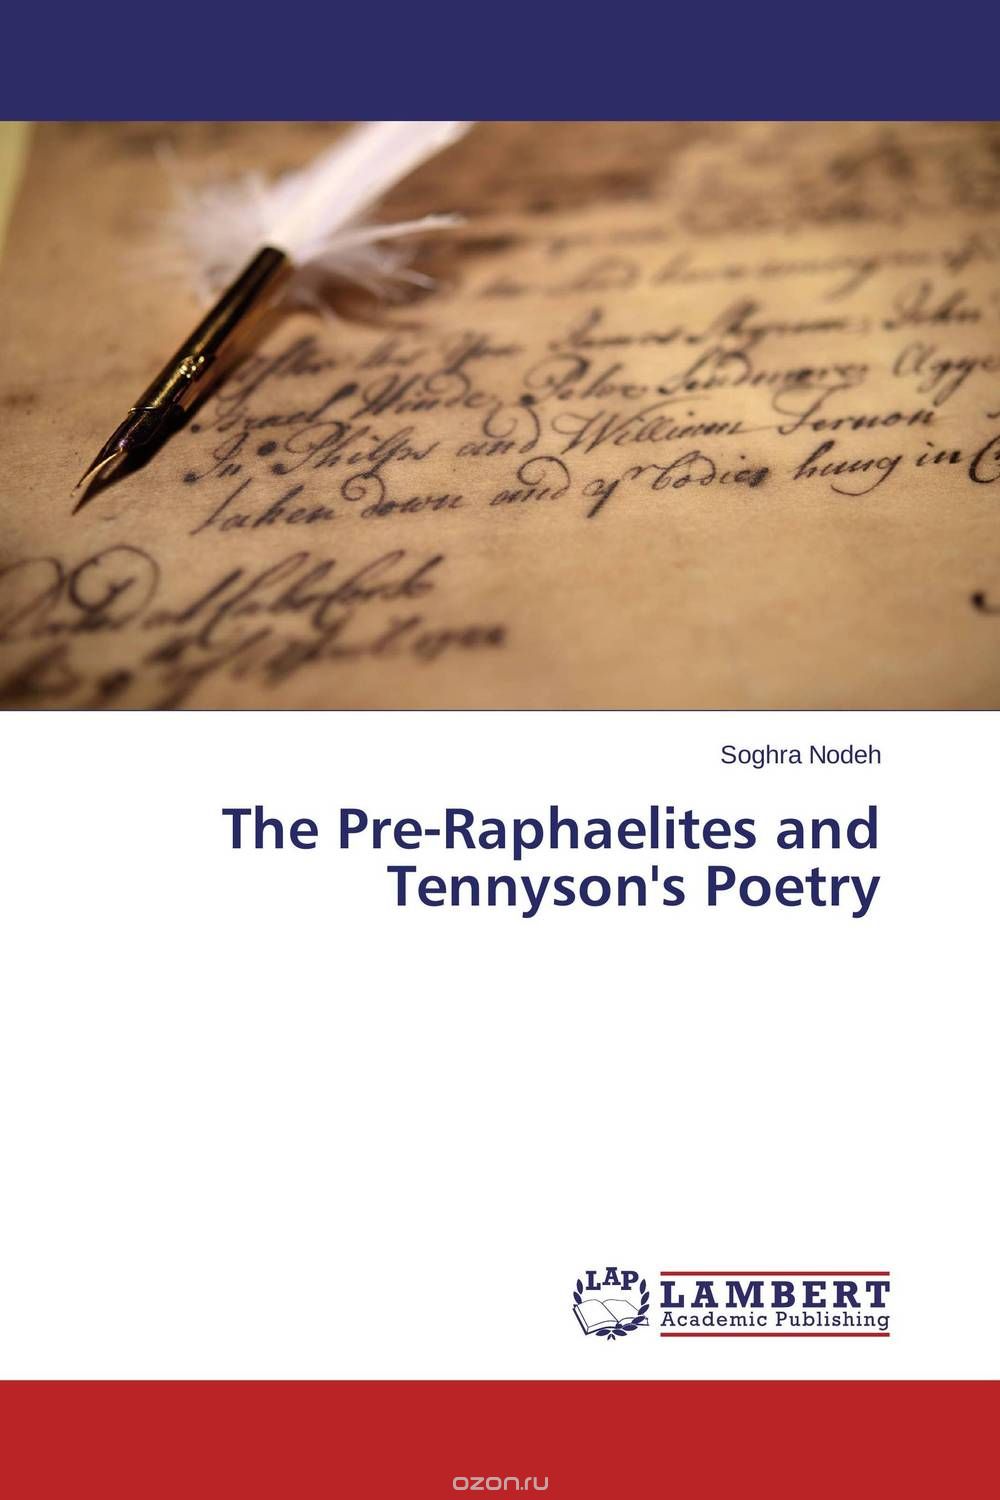 The Pre-Raphaelites and Tennyson's Poetry